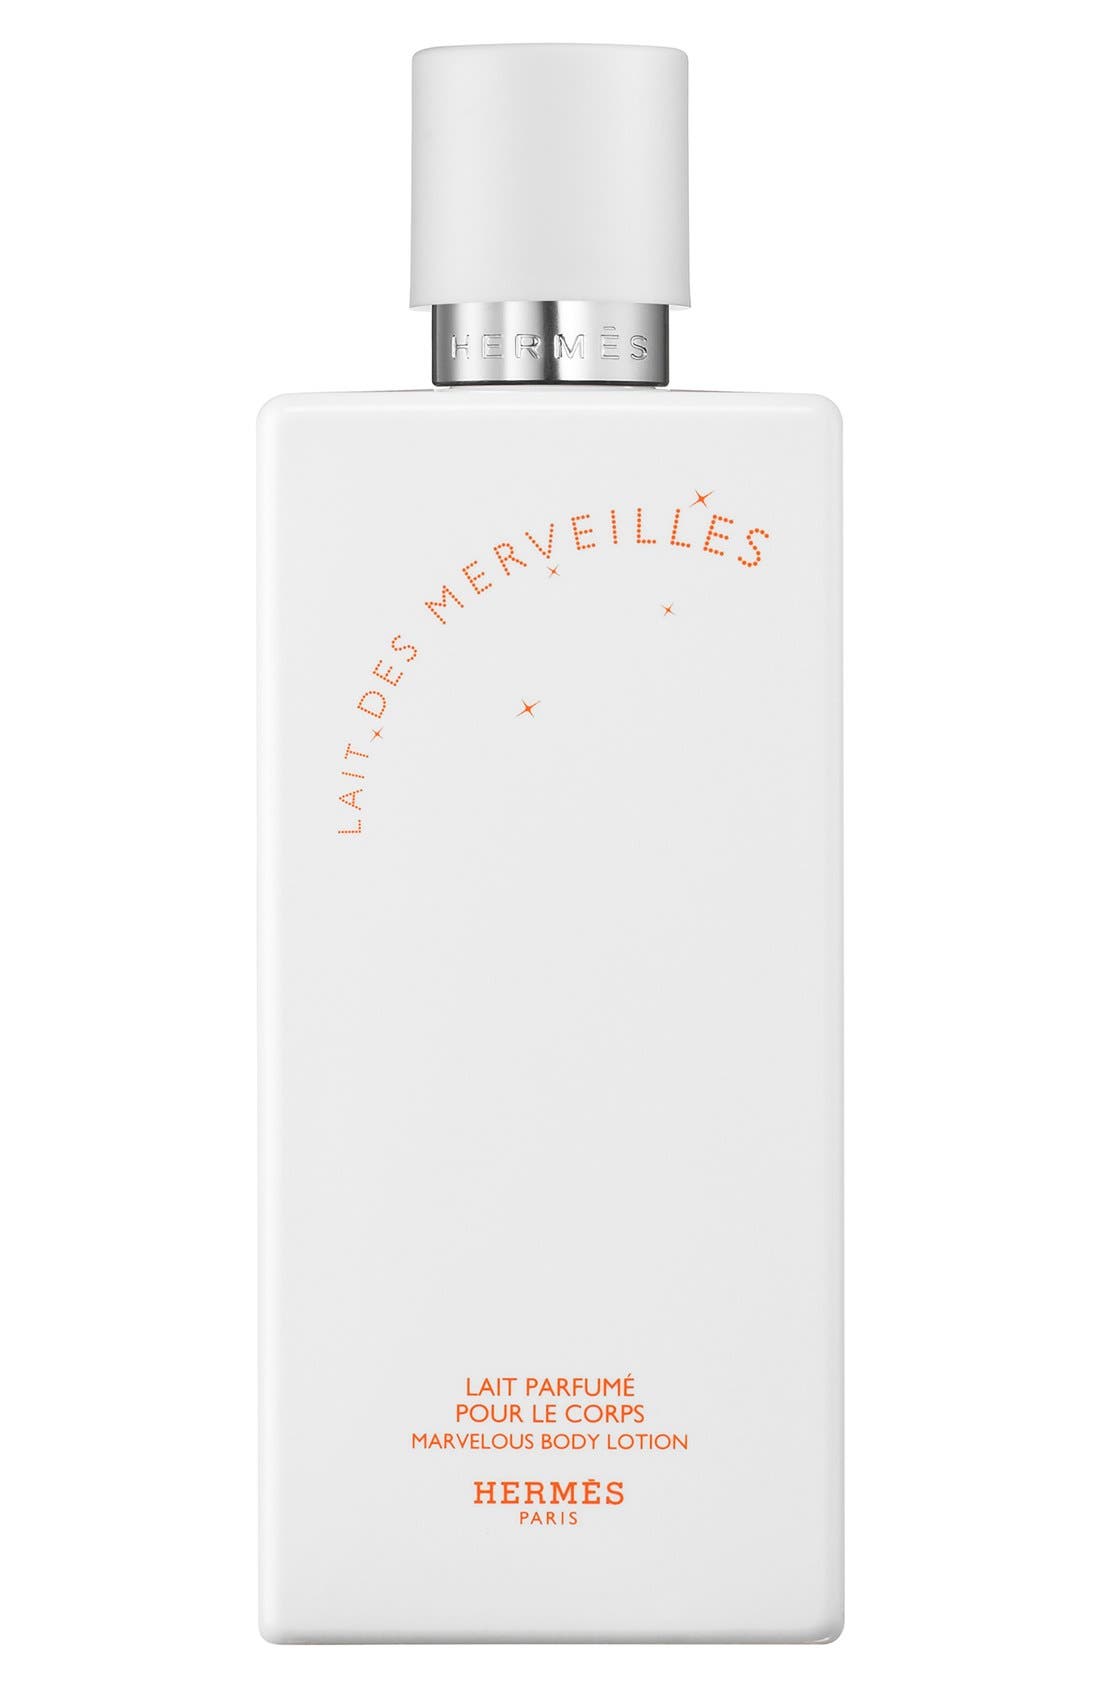 EAN 3346131794393 product image for HERMES Lait des Merveilles - Perfumed body lotion, Size 6.5 Oz at Nordstrom | upcitemdb.com